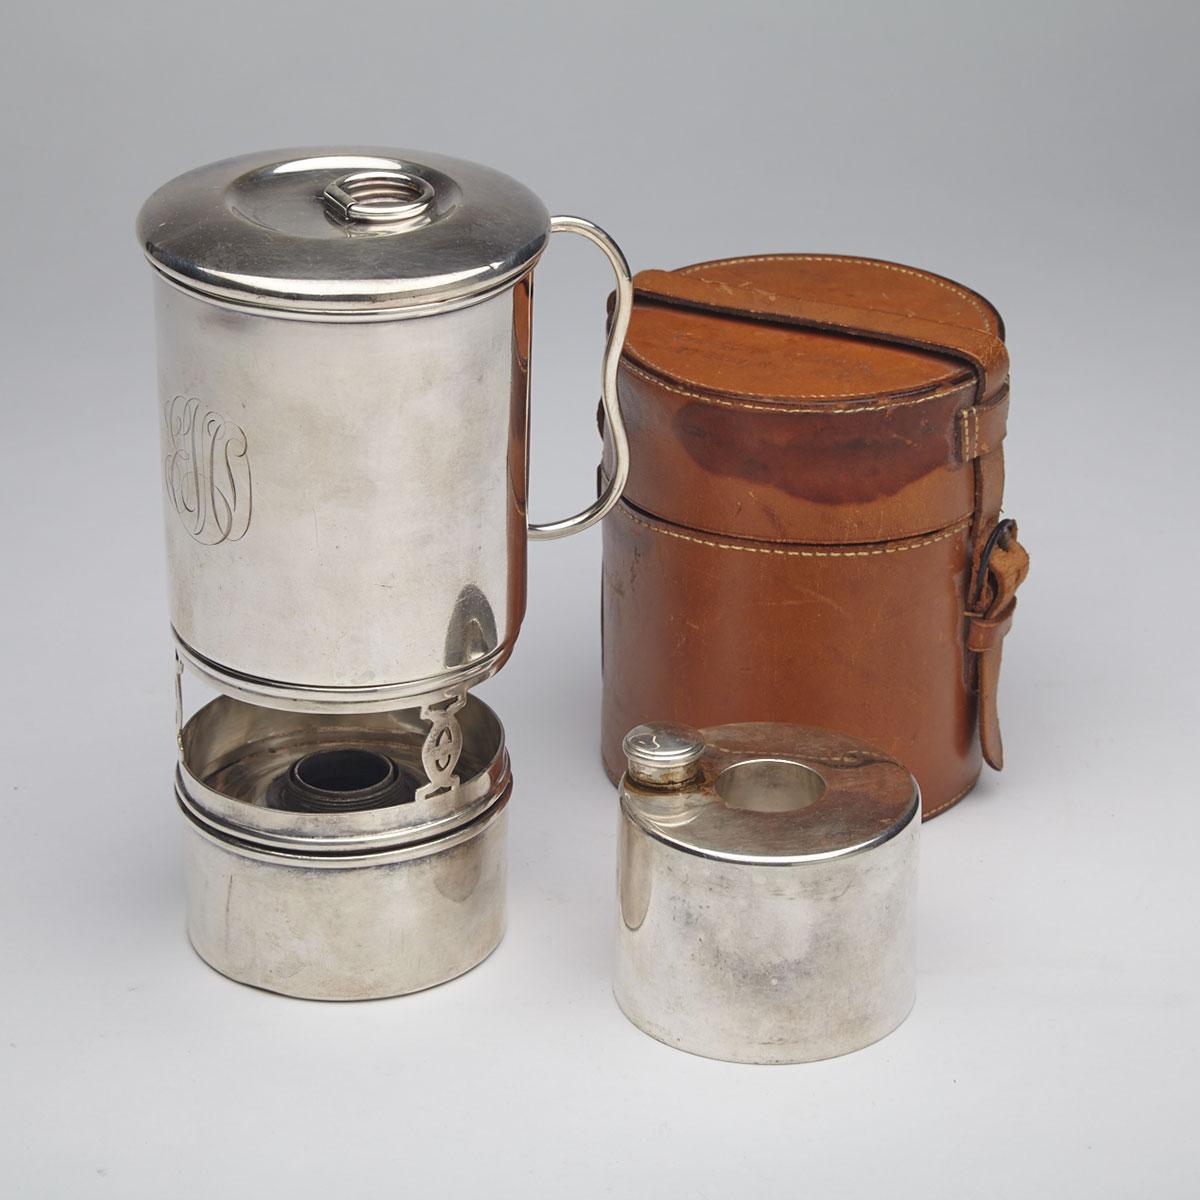 Tiffany & Co. Silver Plated Travel mug set, early 20th century